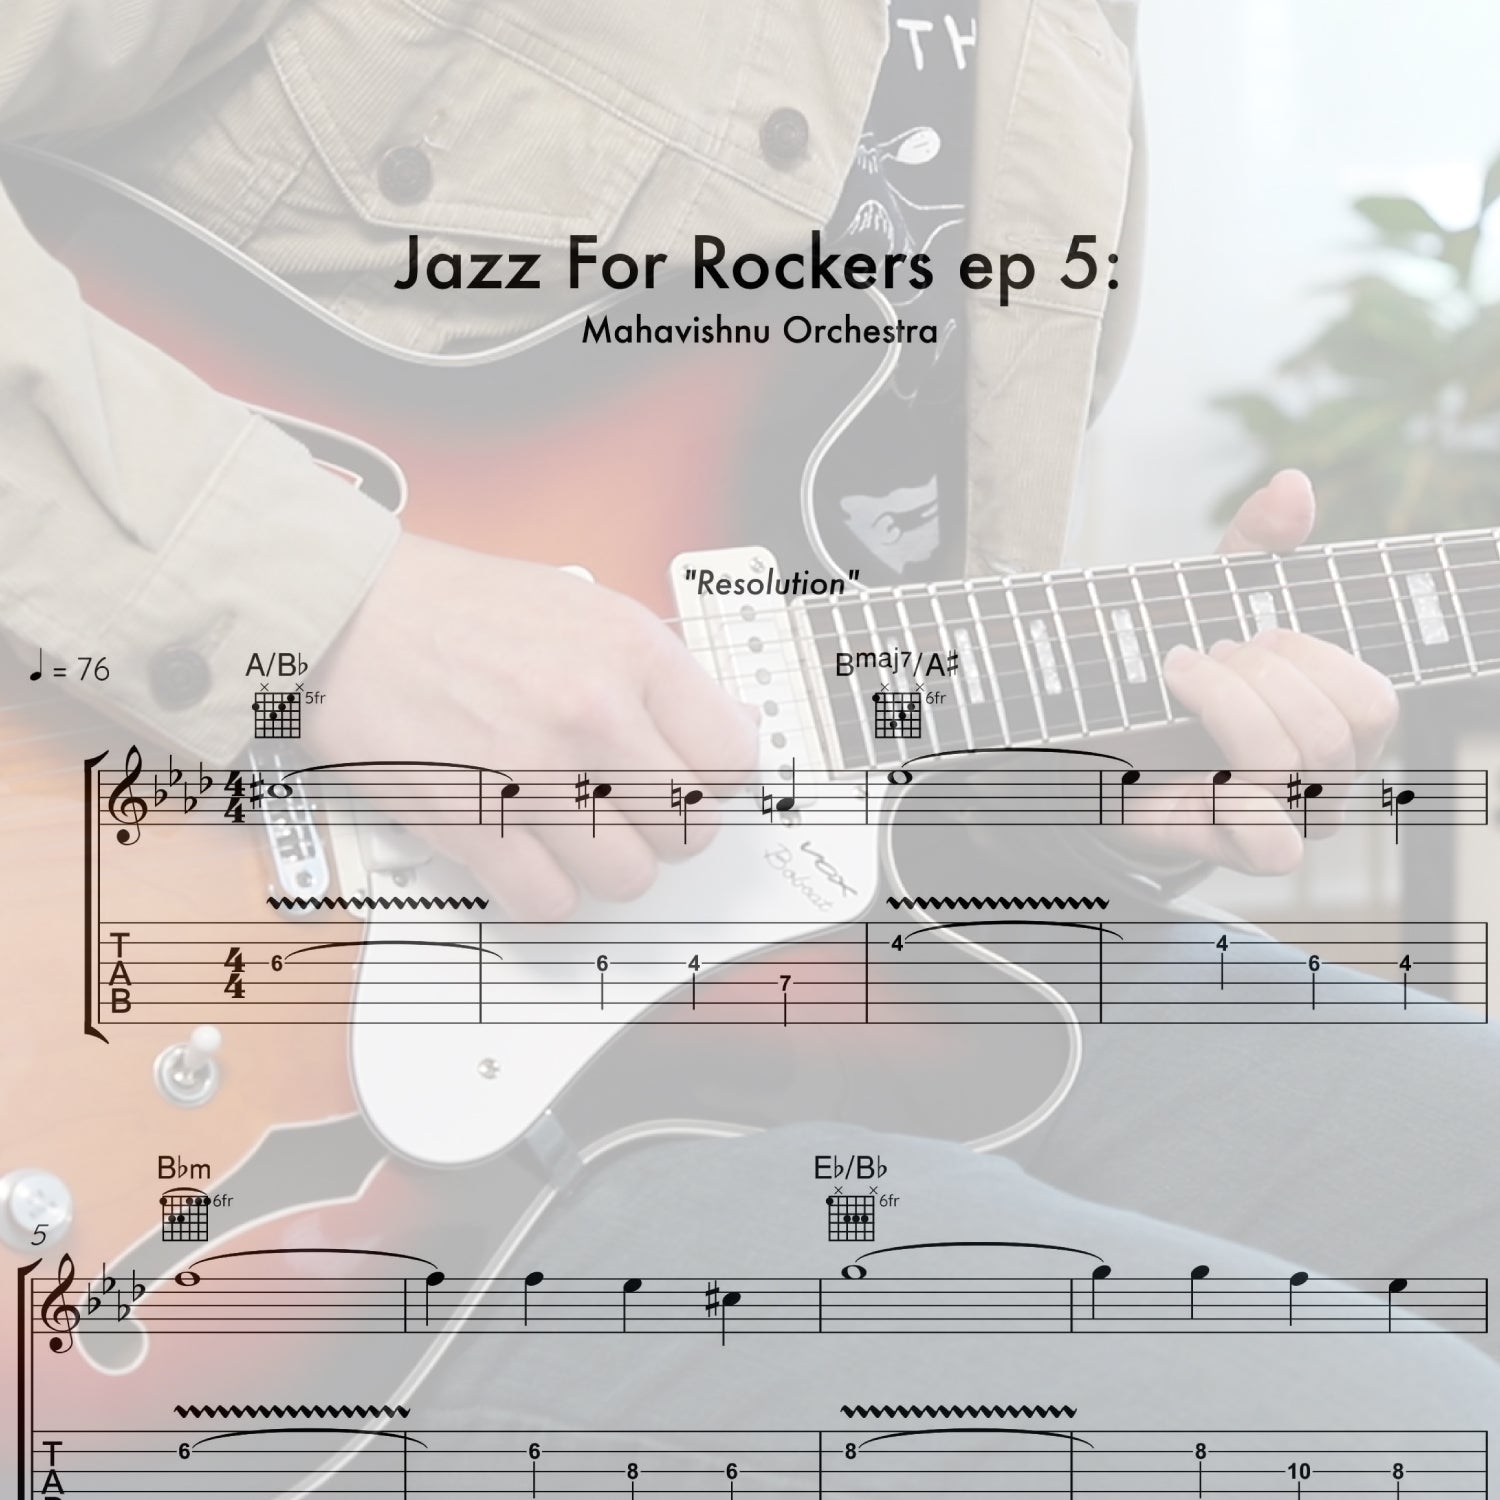 Jazz For Rockers ep 5: Mahavishnu Orchestra